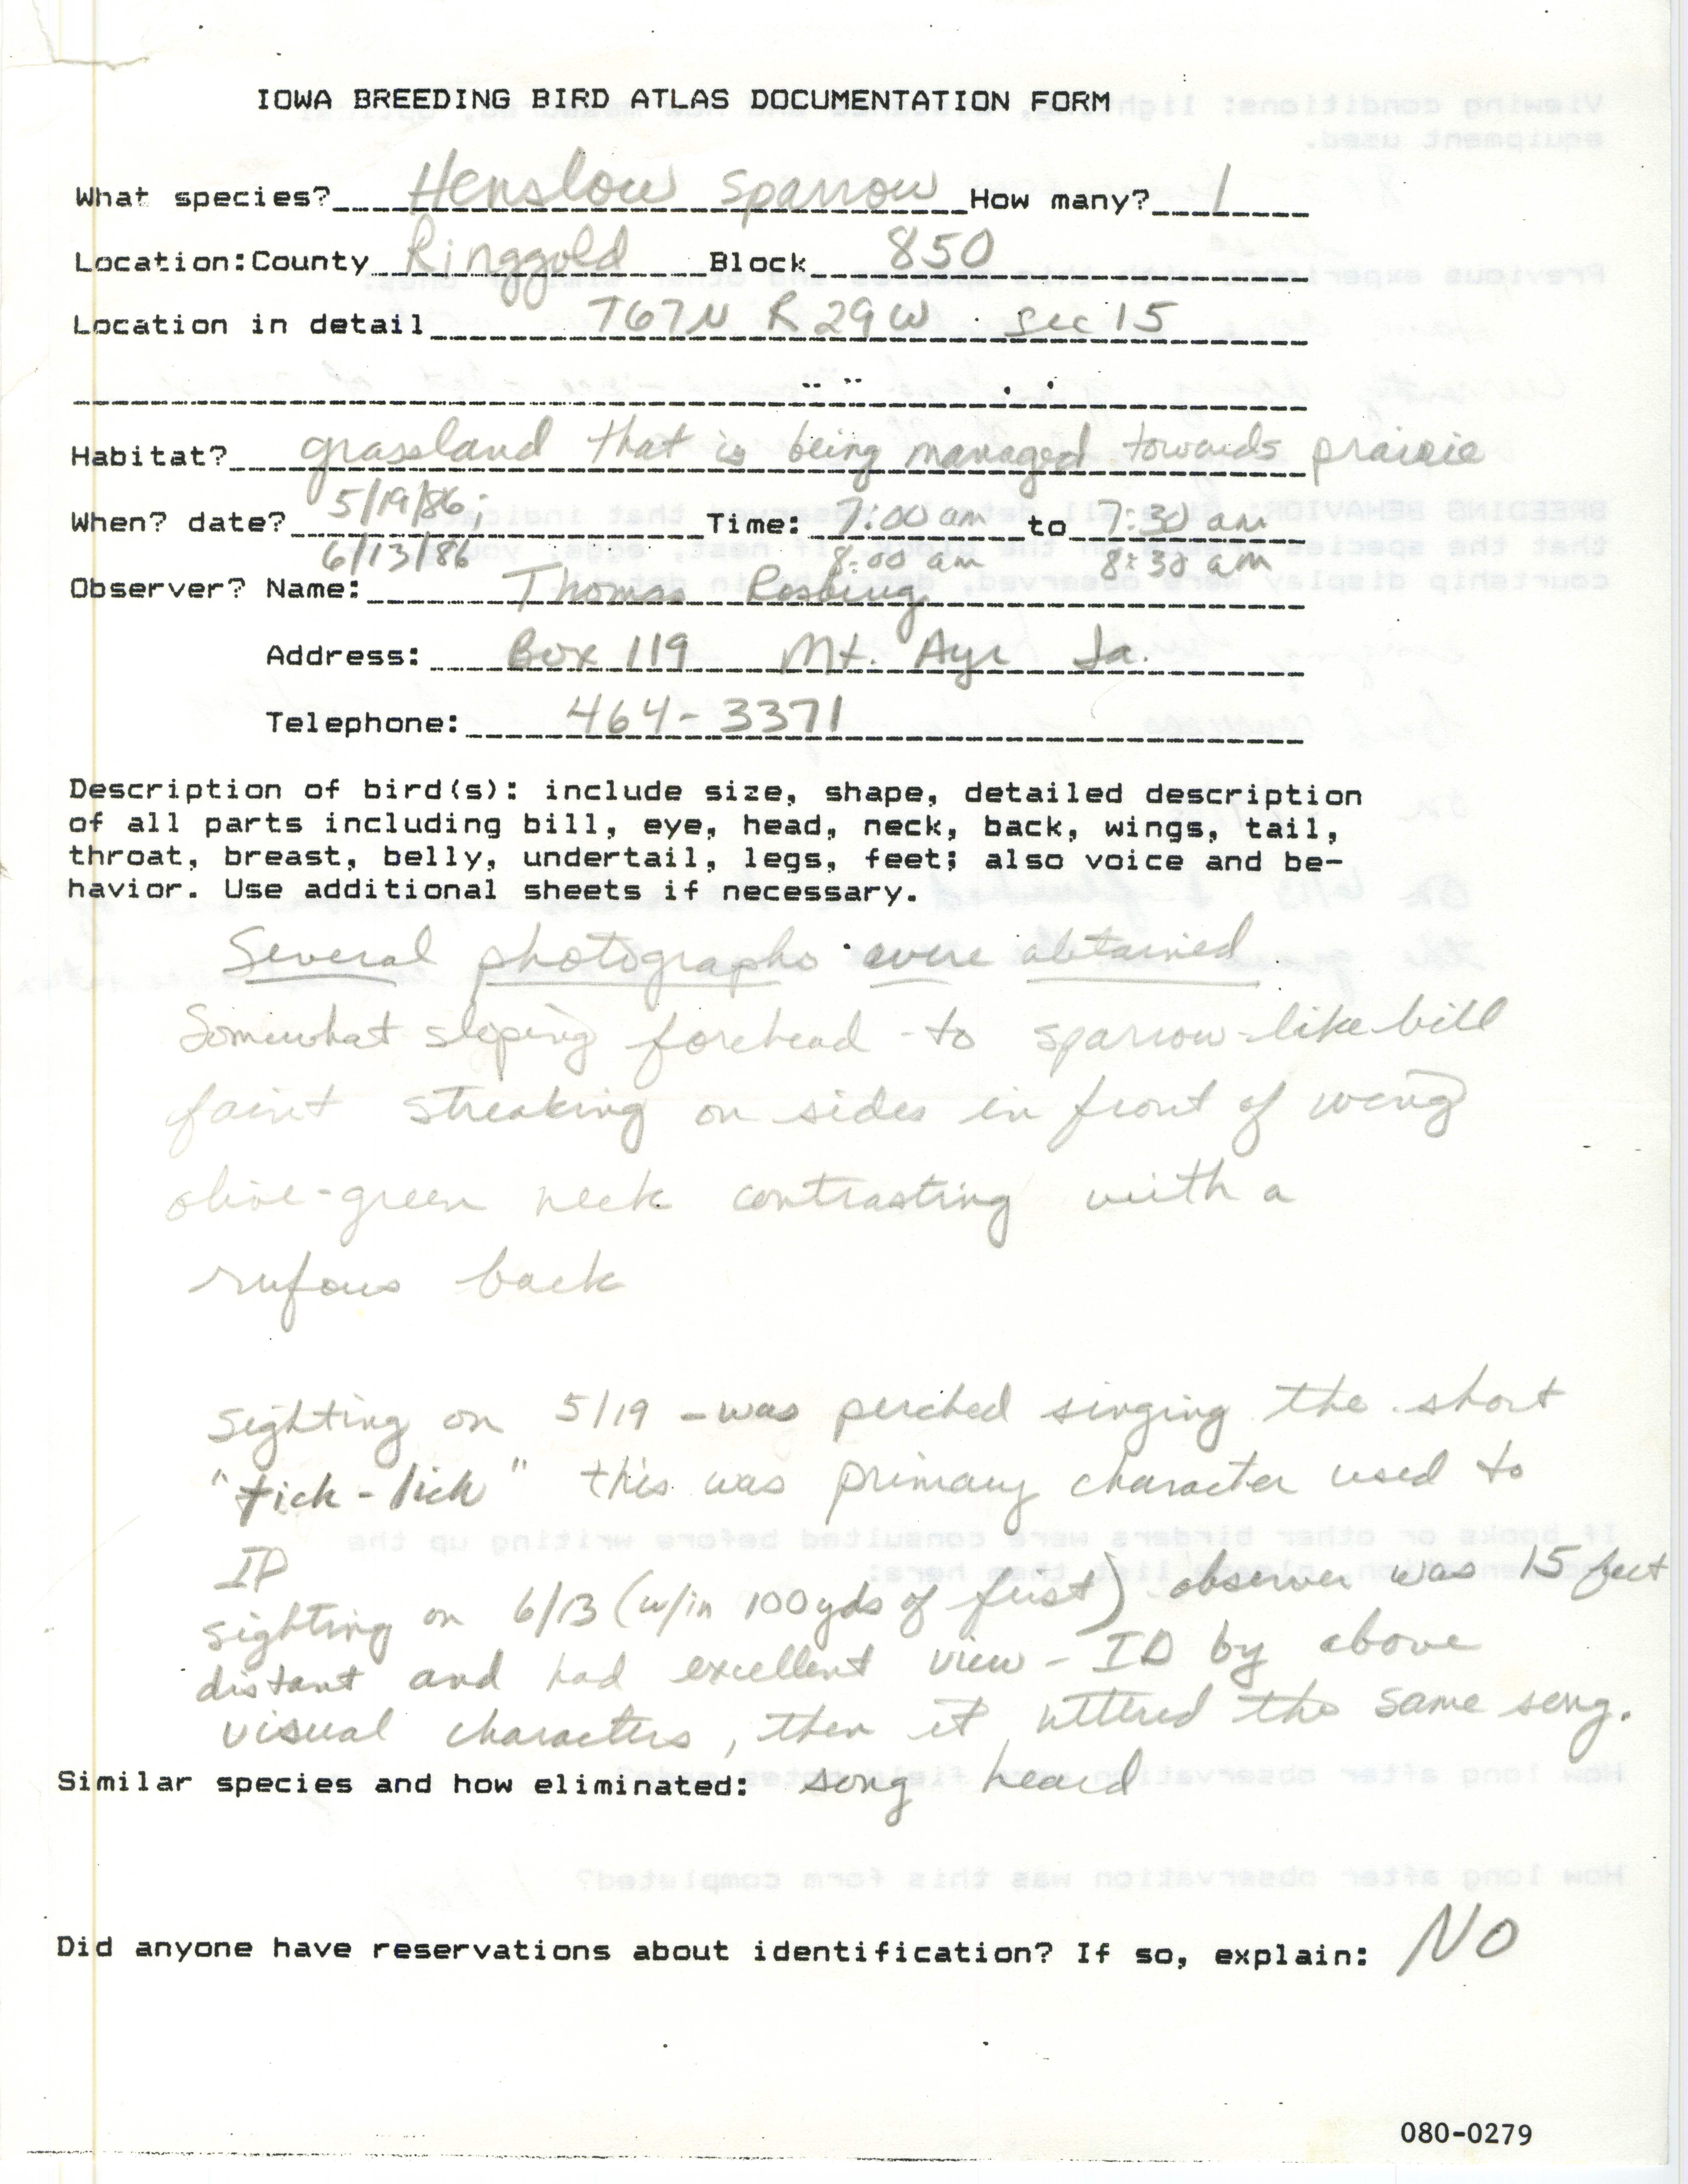 Iowa Breeding Bird Atlas documentation form, Thomas Rosburg, May 19, 1986, and June 13, 1986